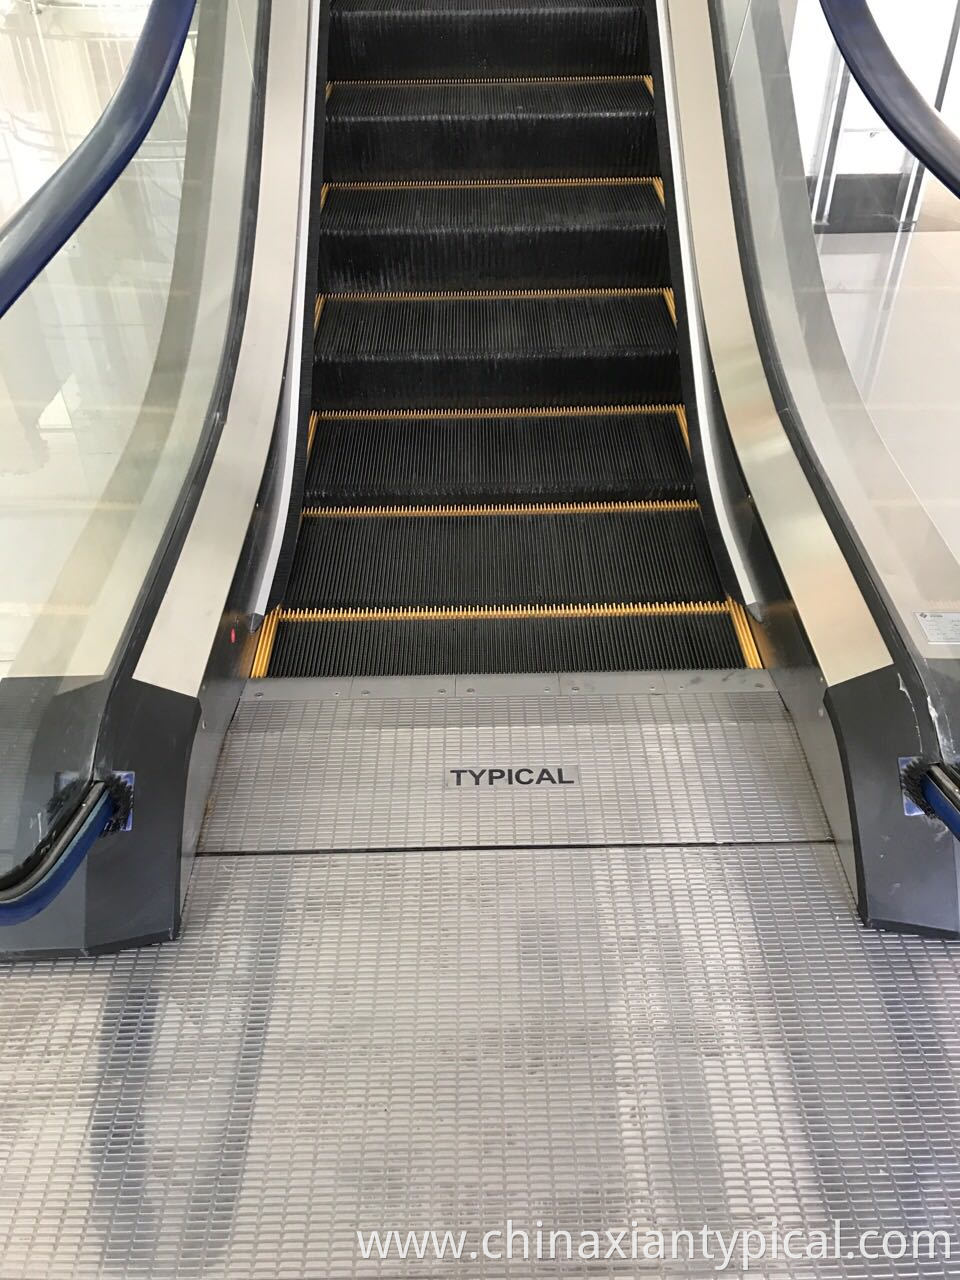 Typical Escalator